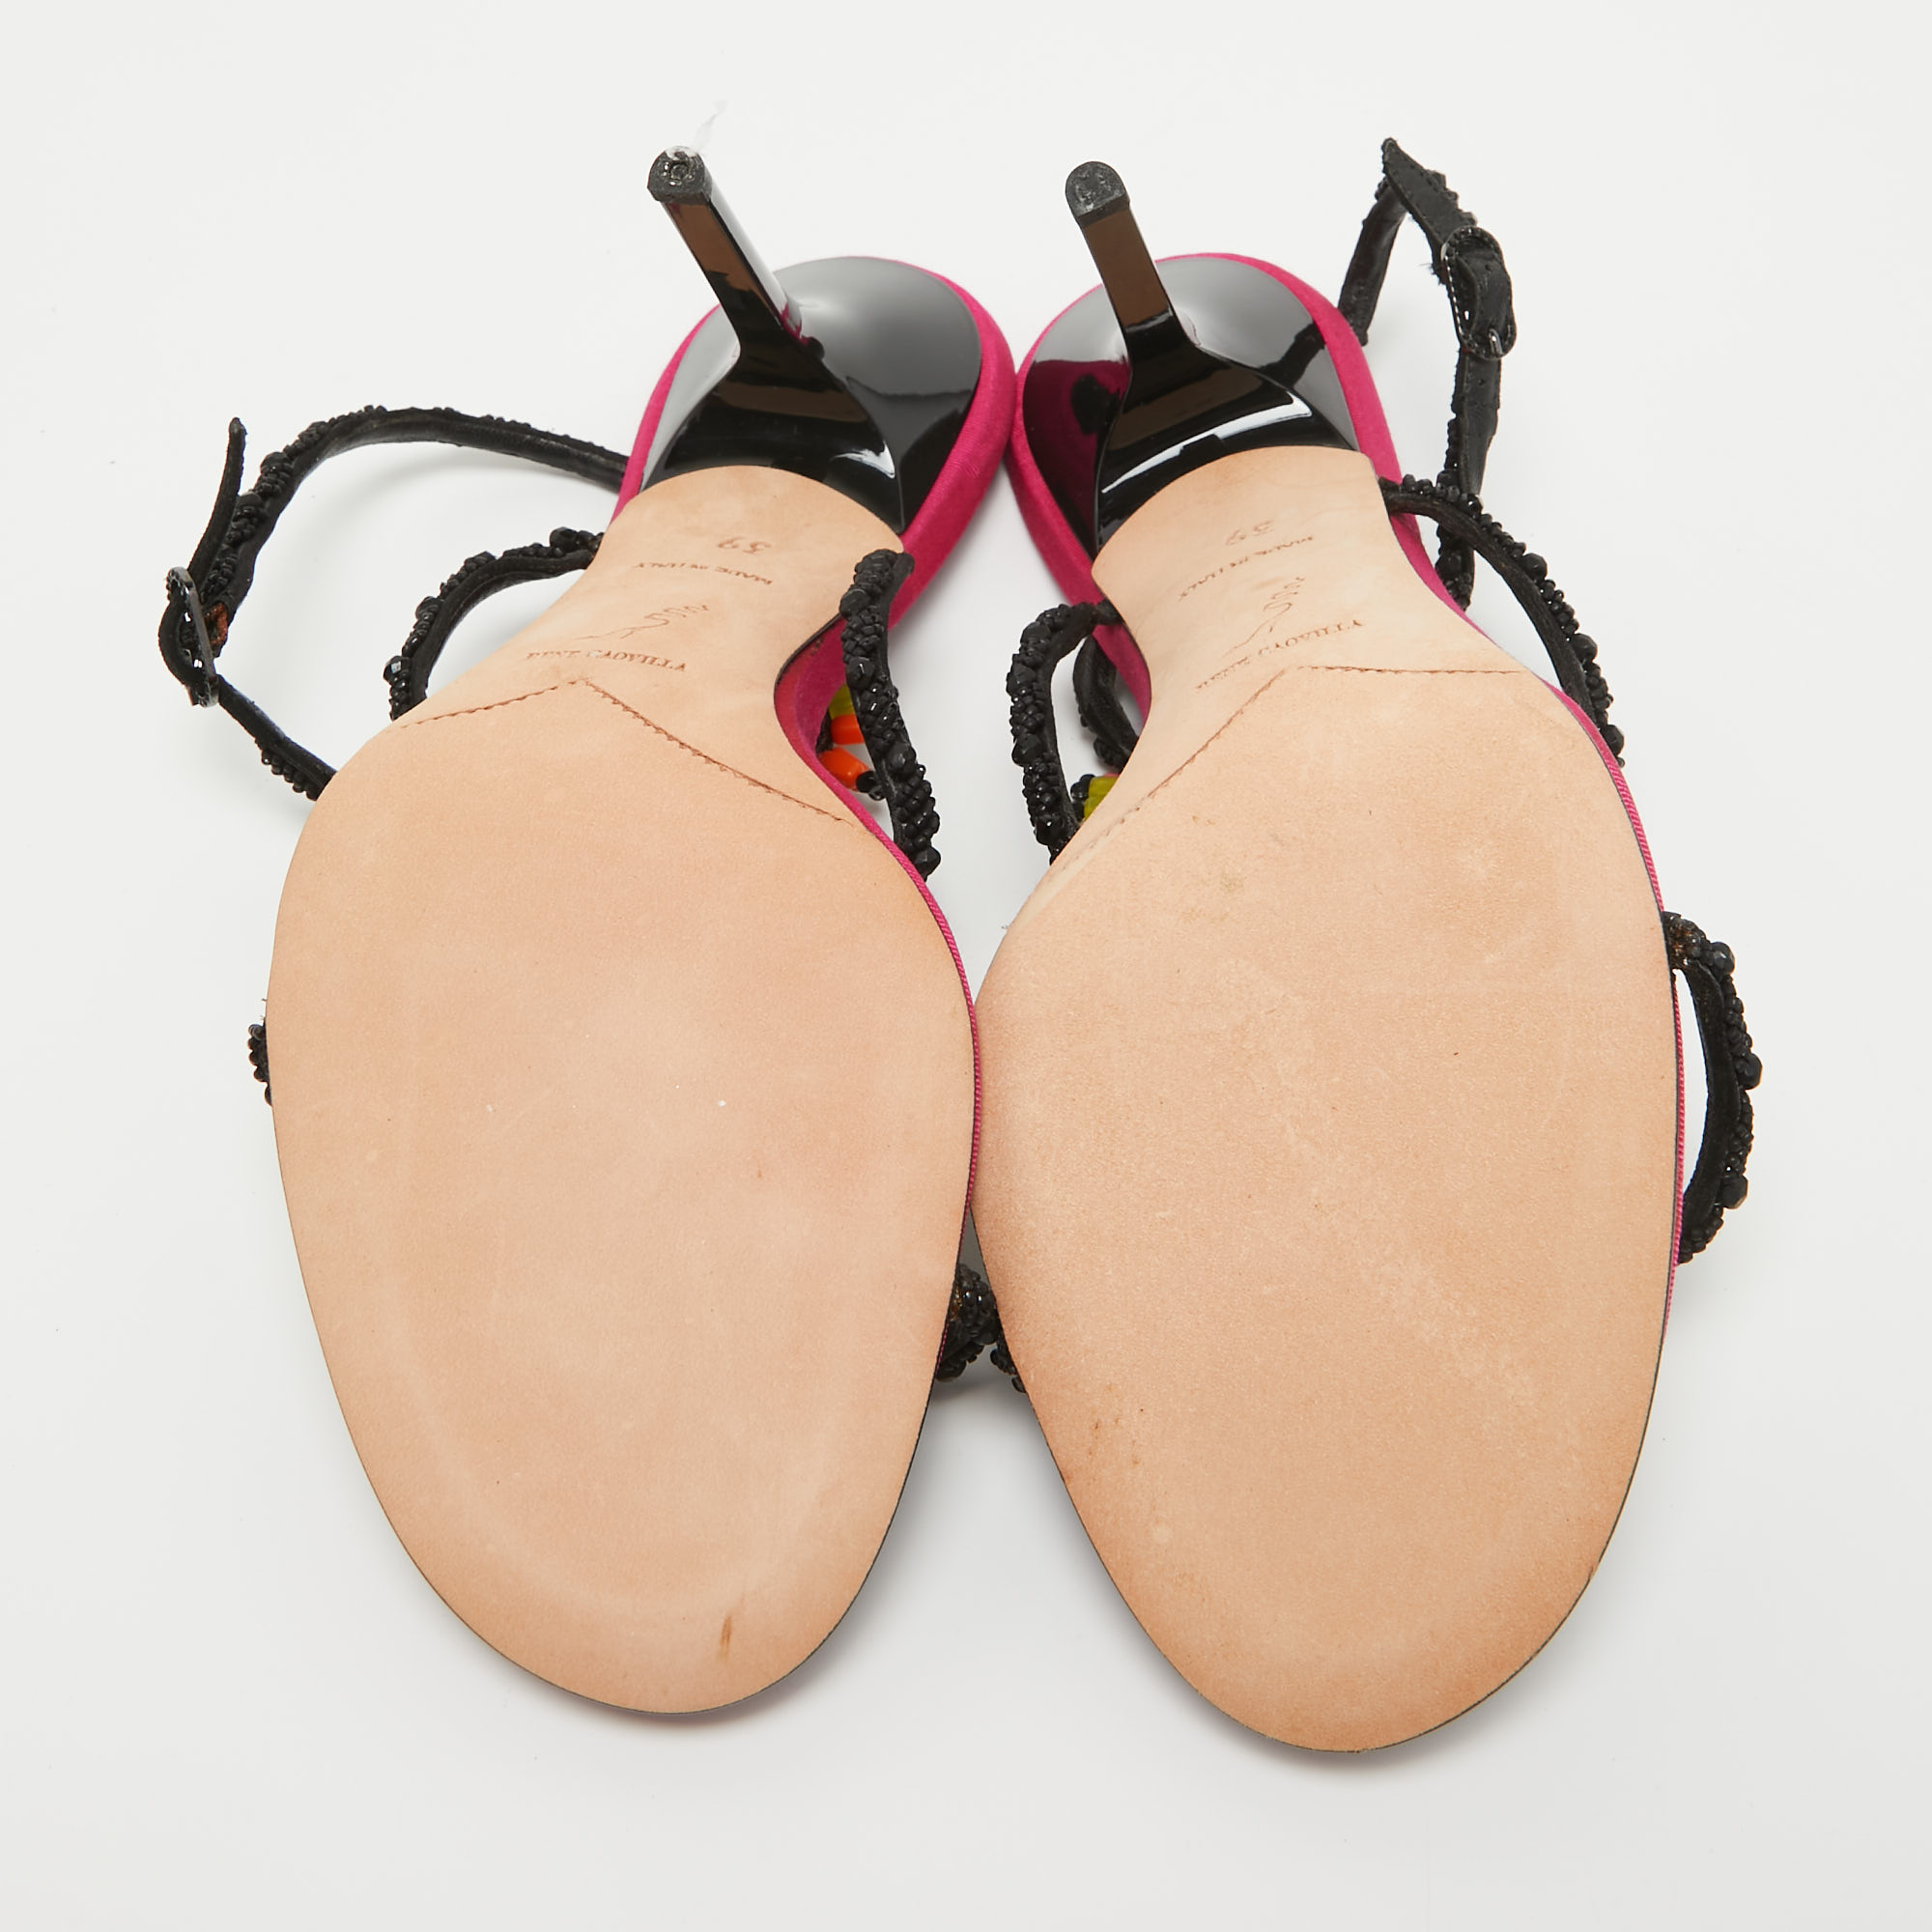 René Caovilla Black Satin Embellished Slingback Sandals Size 39